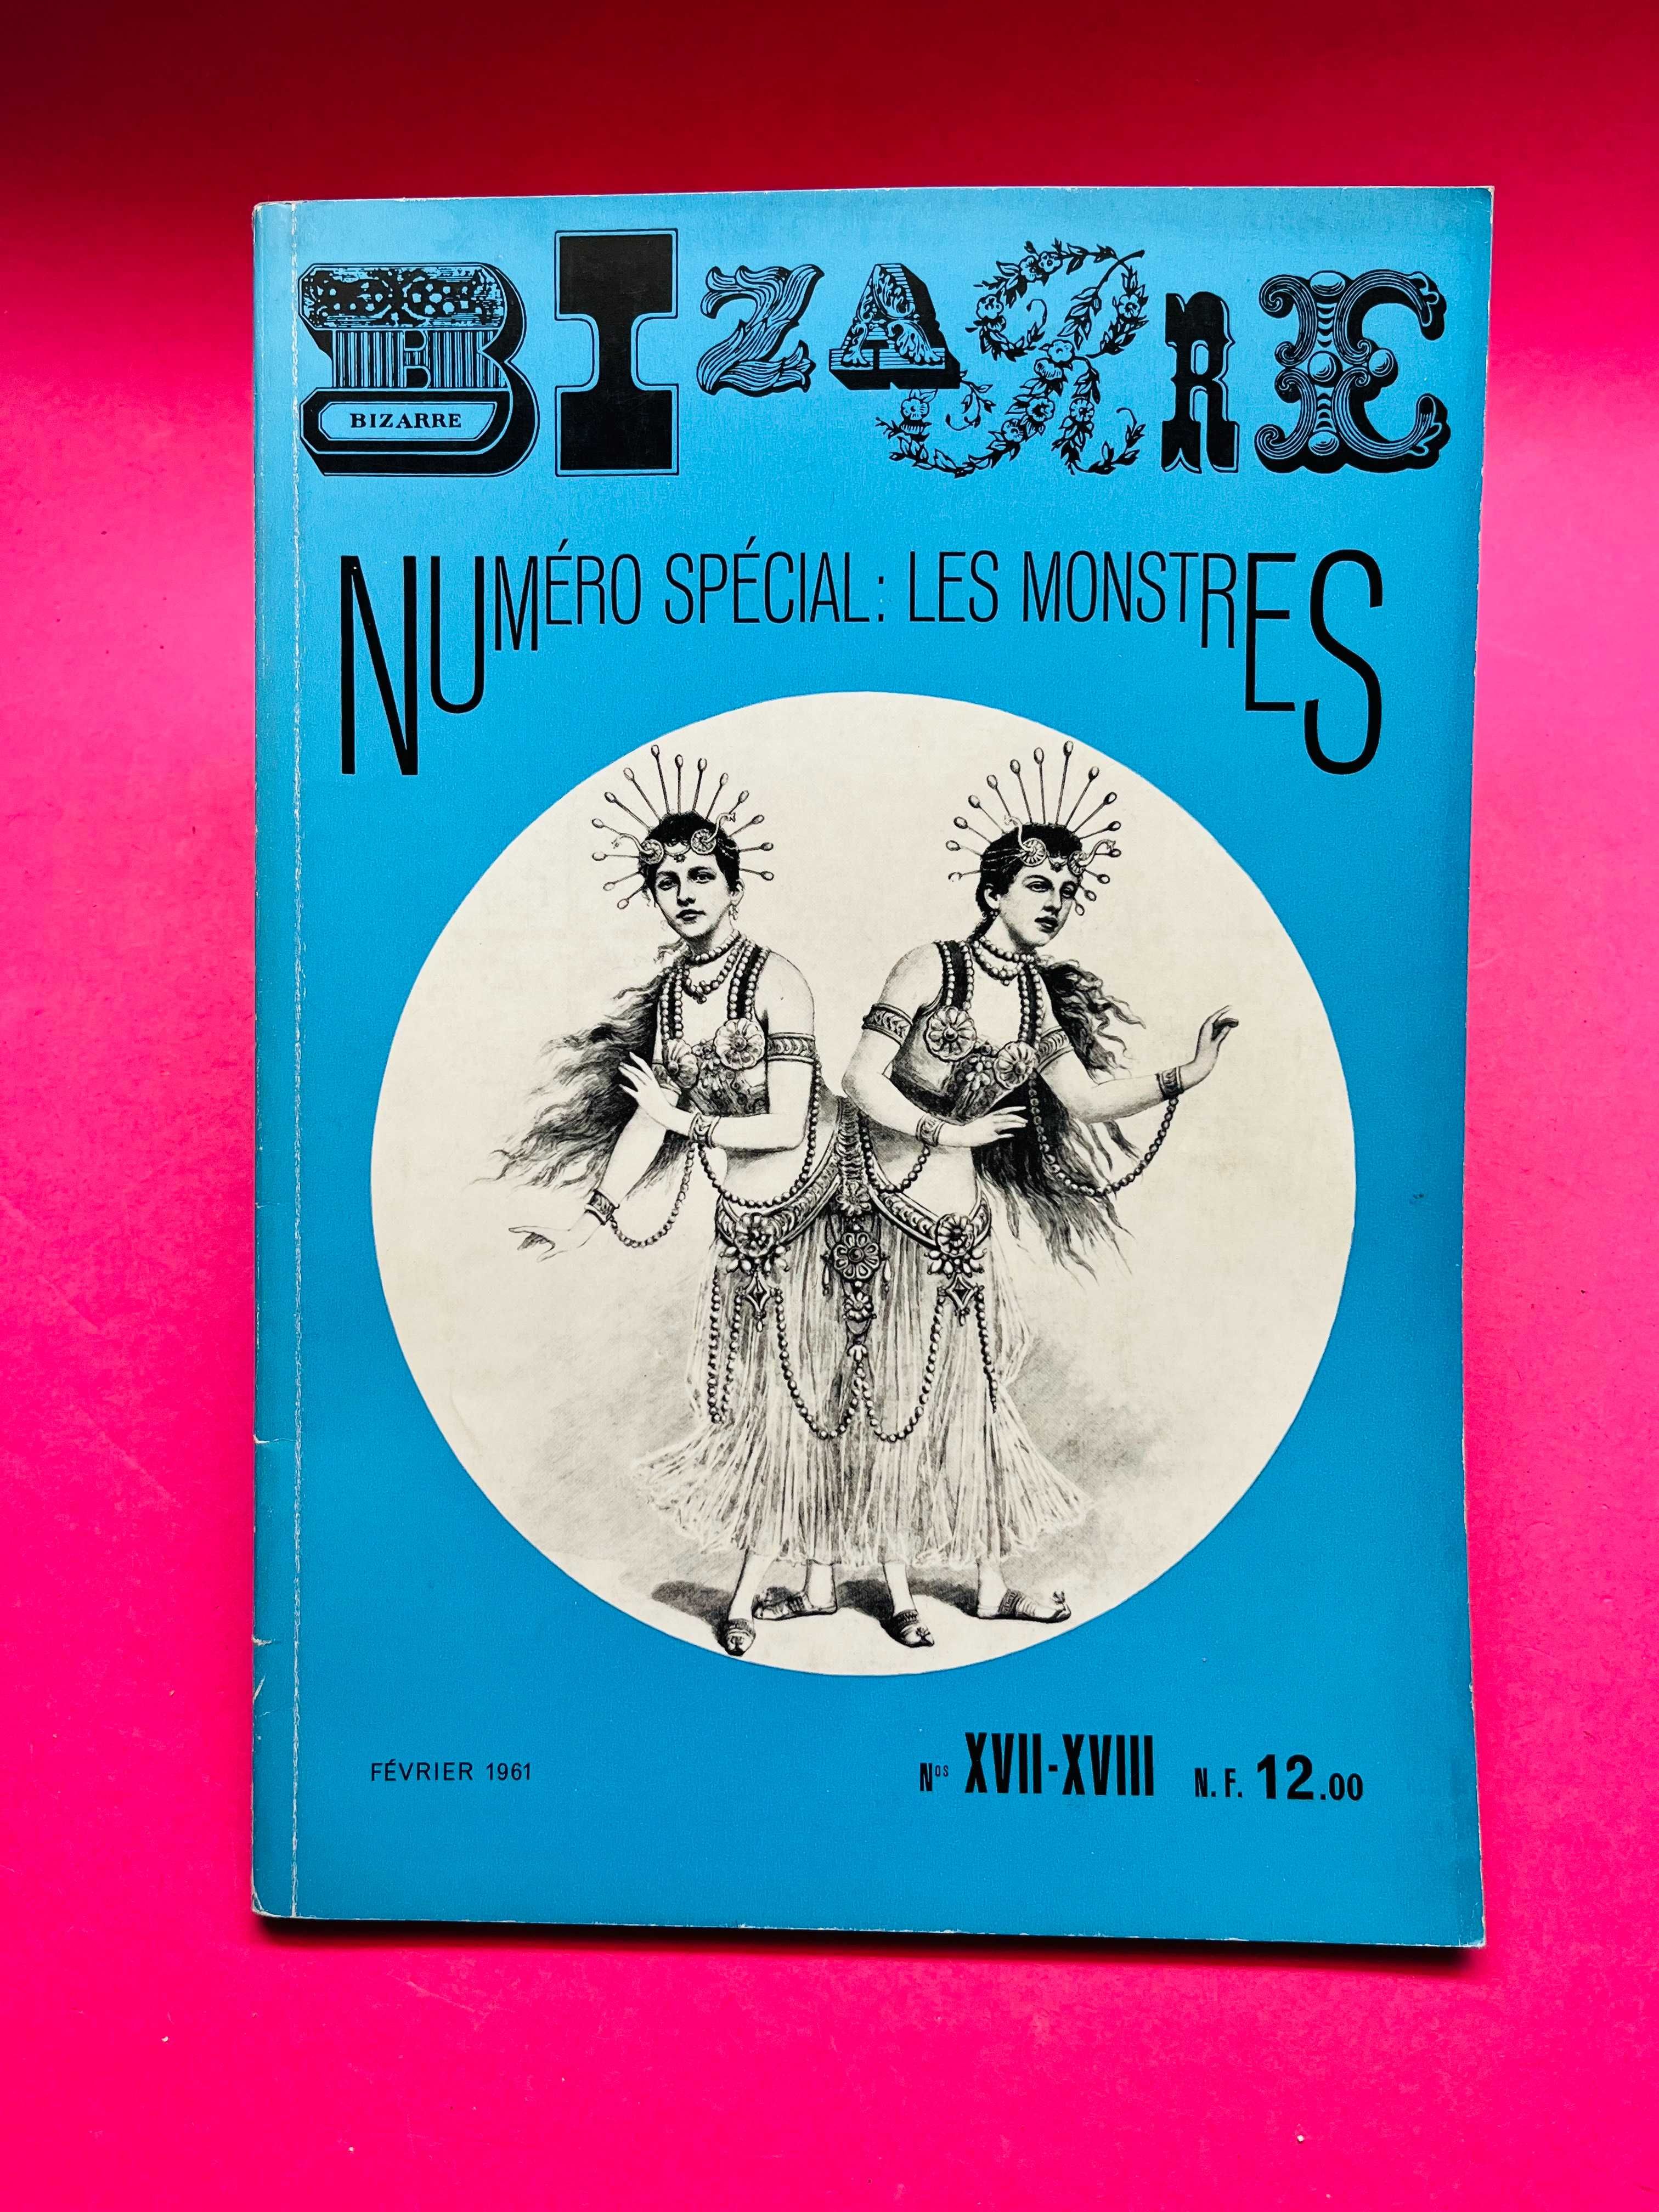 Bizarre - Número Spécial: Les Monstres - Février 1961 nºXVII-XVIII